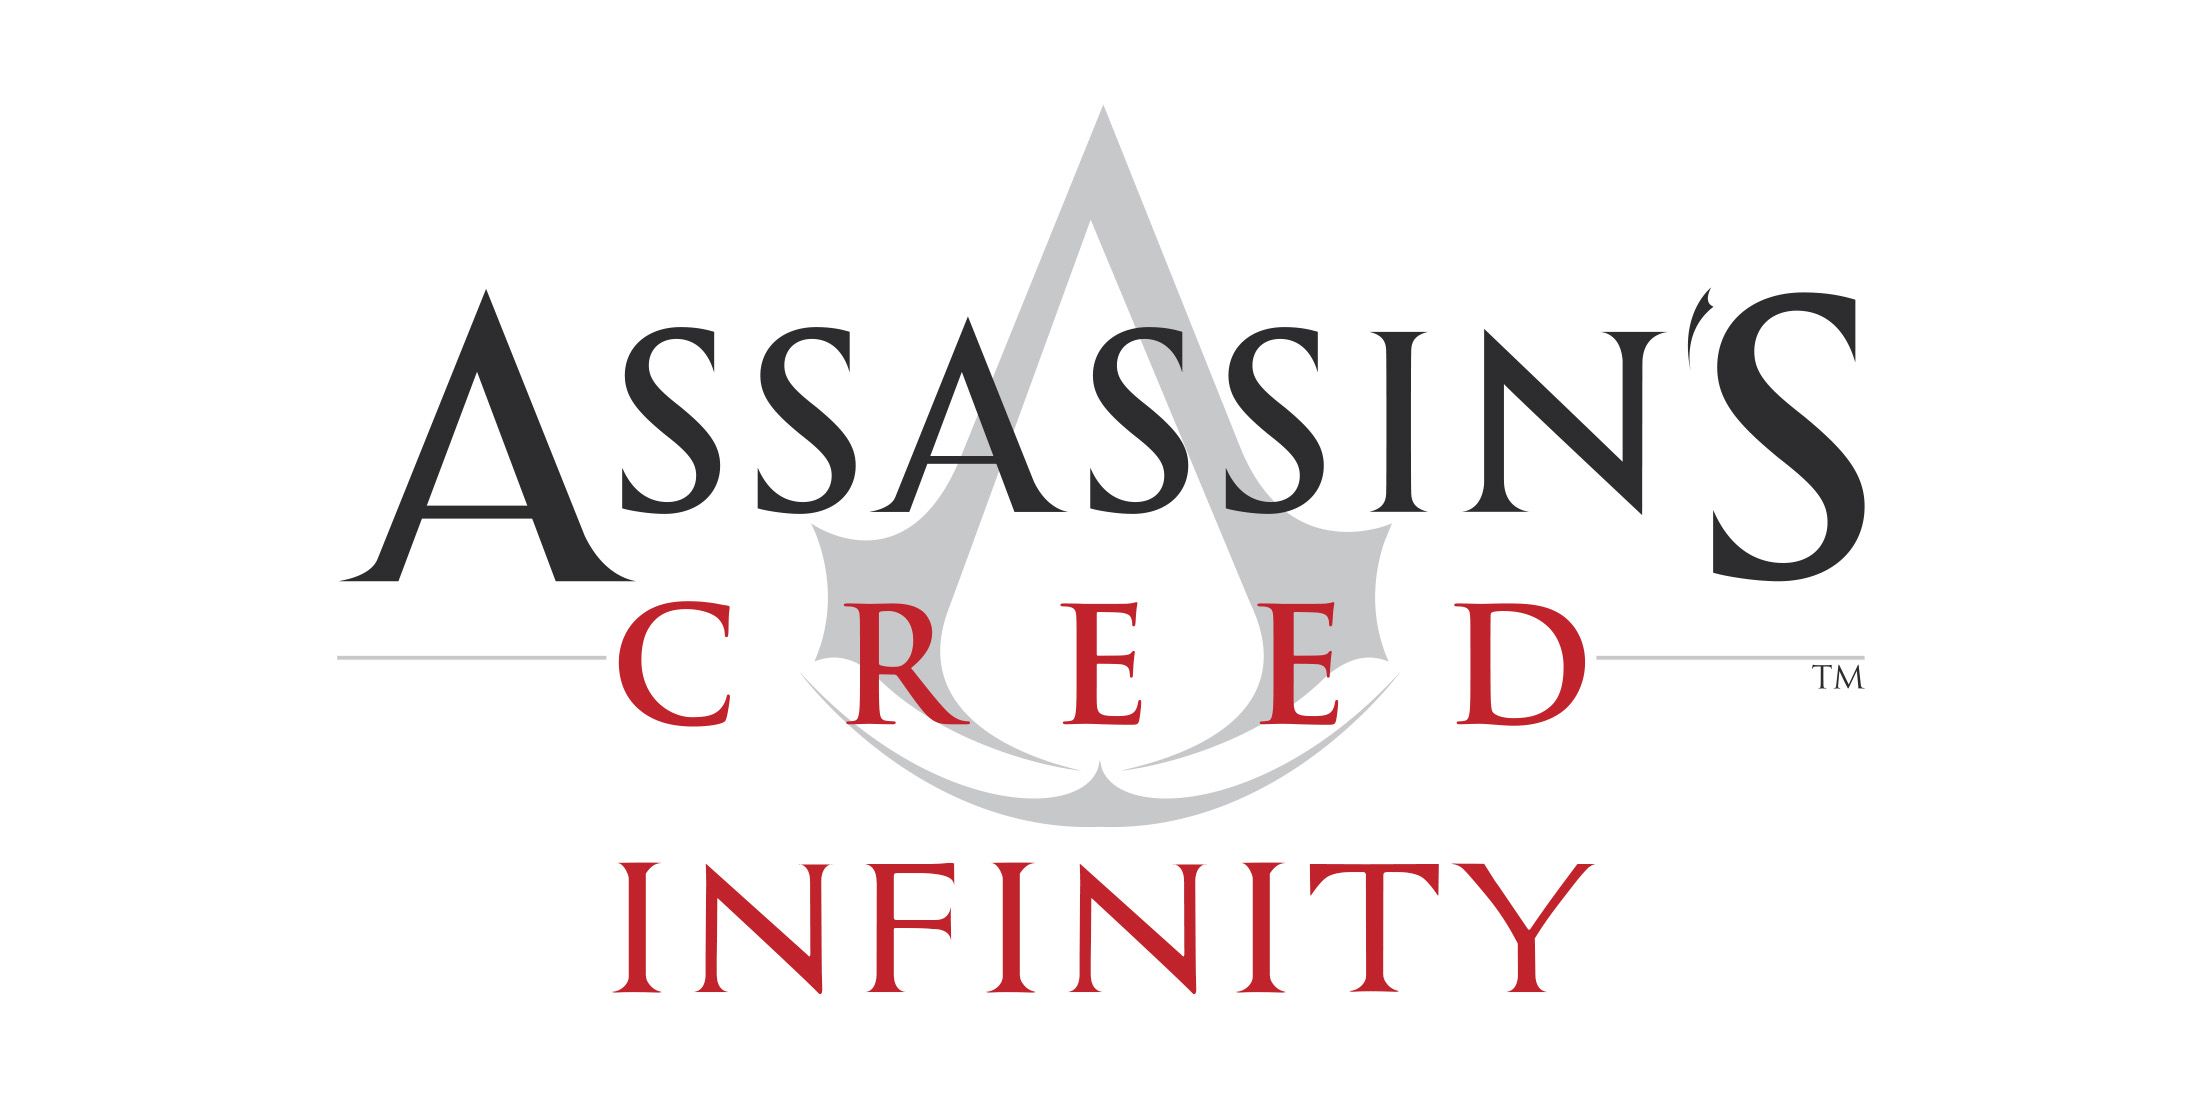 Assassin's Creed Infinity logo mockup on white background